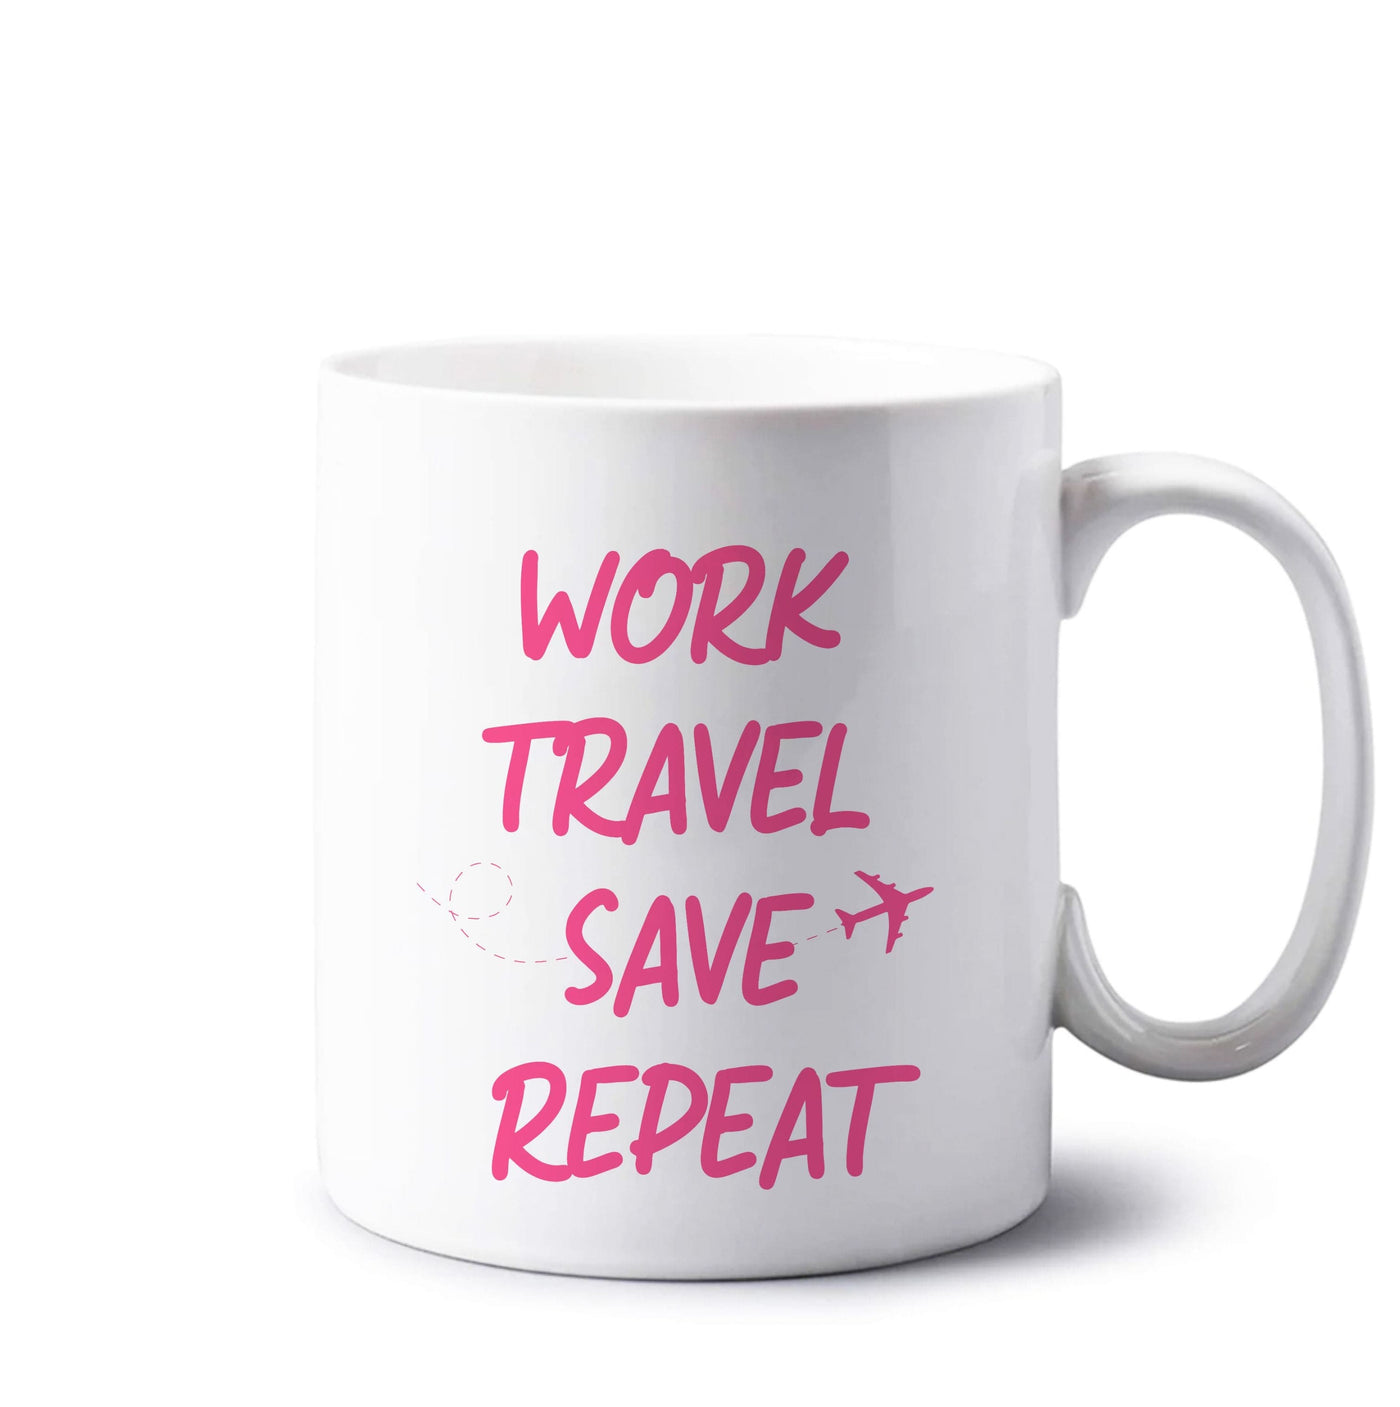 Work Travel Save Repeat - Travel Mug